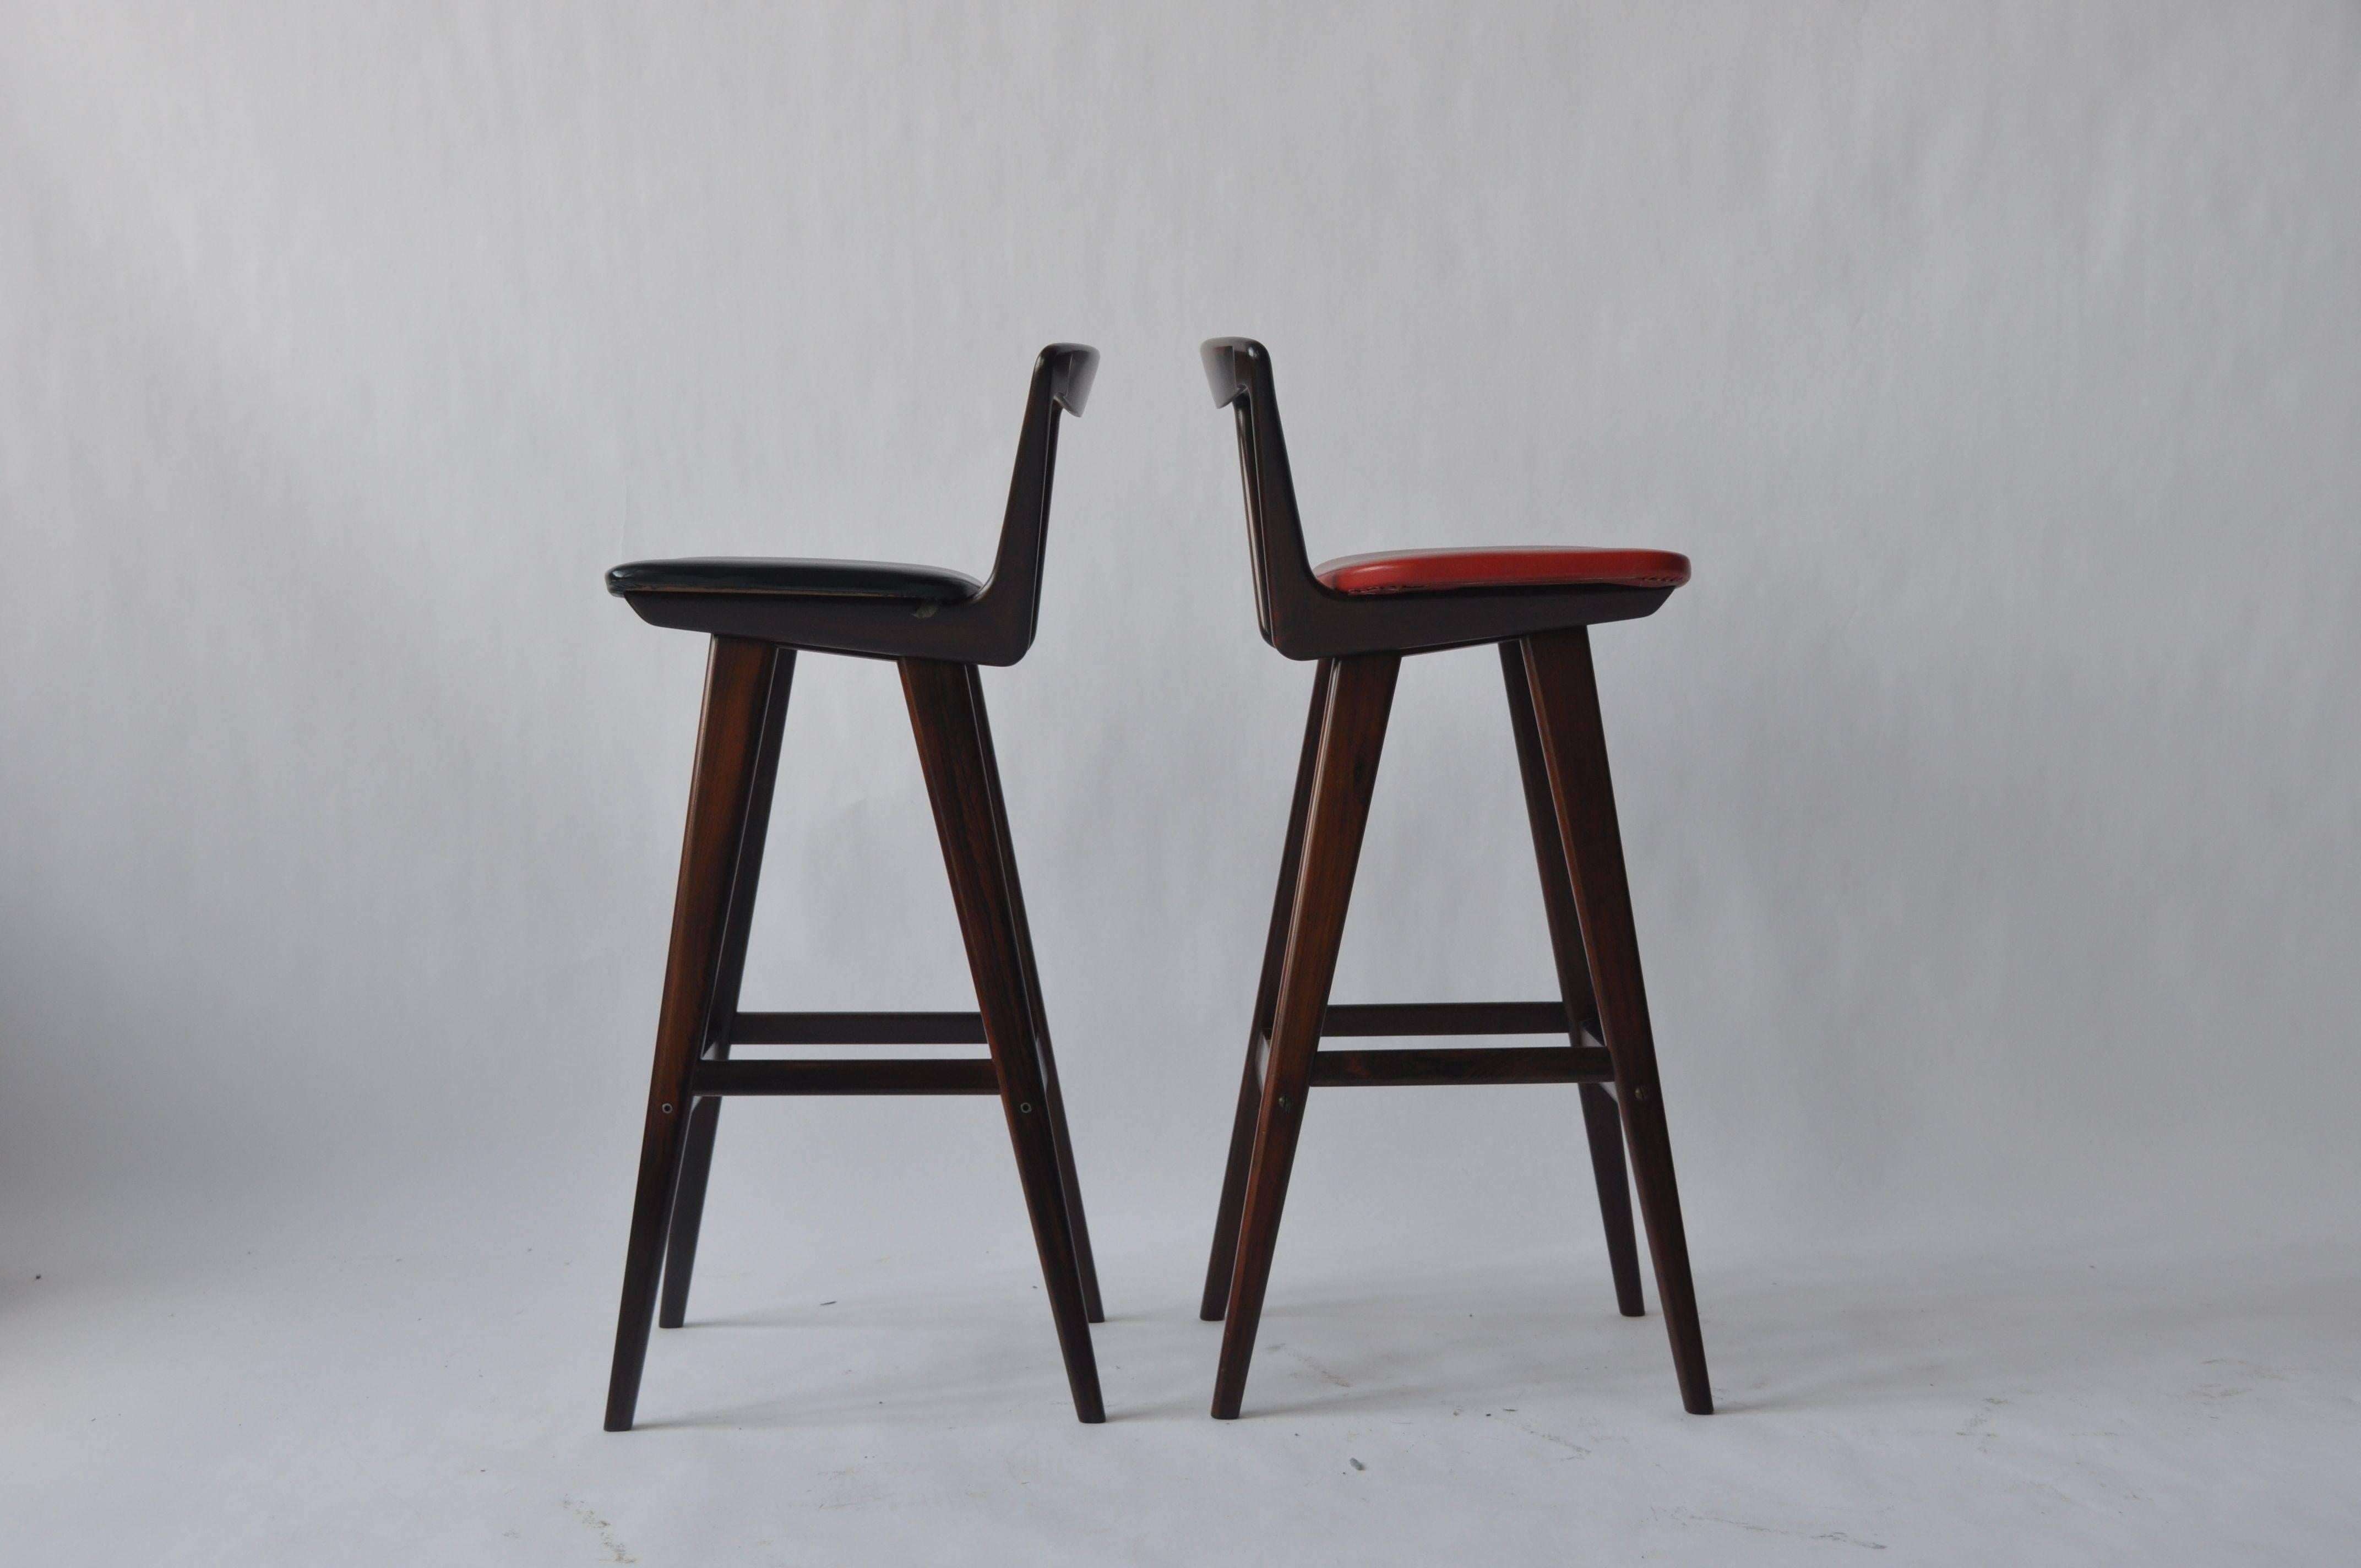 Pair of rosewood bar stools by Rosengren Hansen for Brande Møbelfabrik.
      